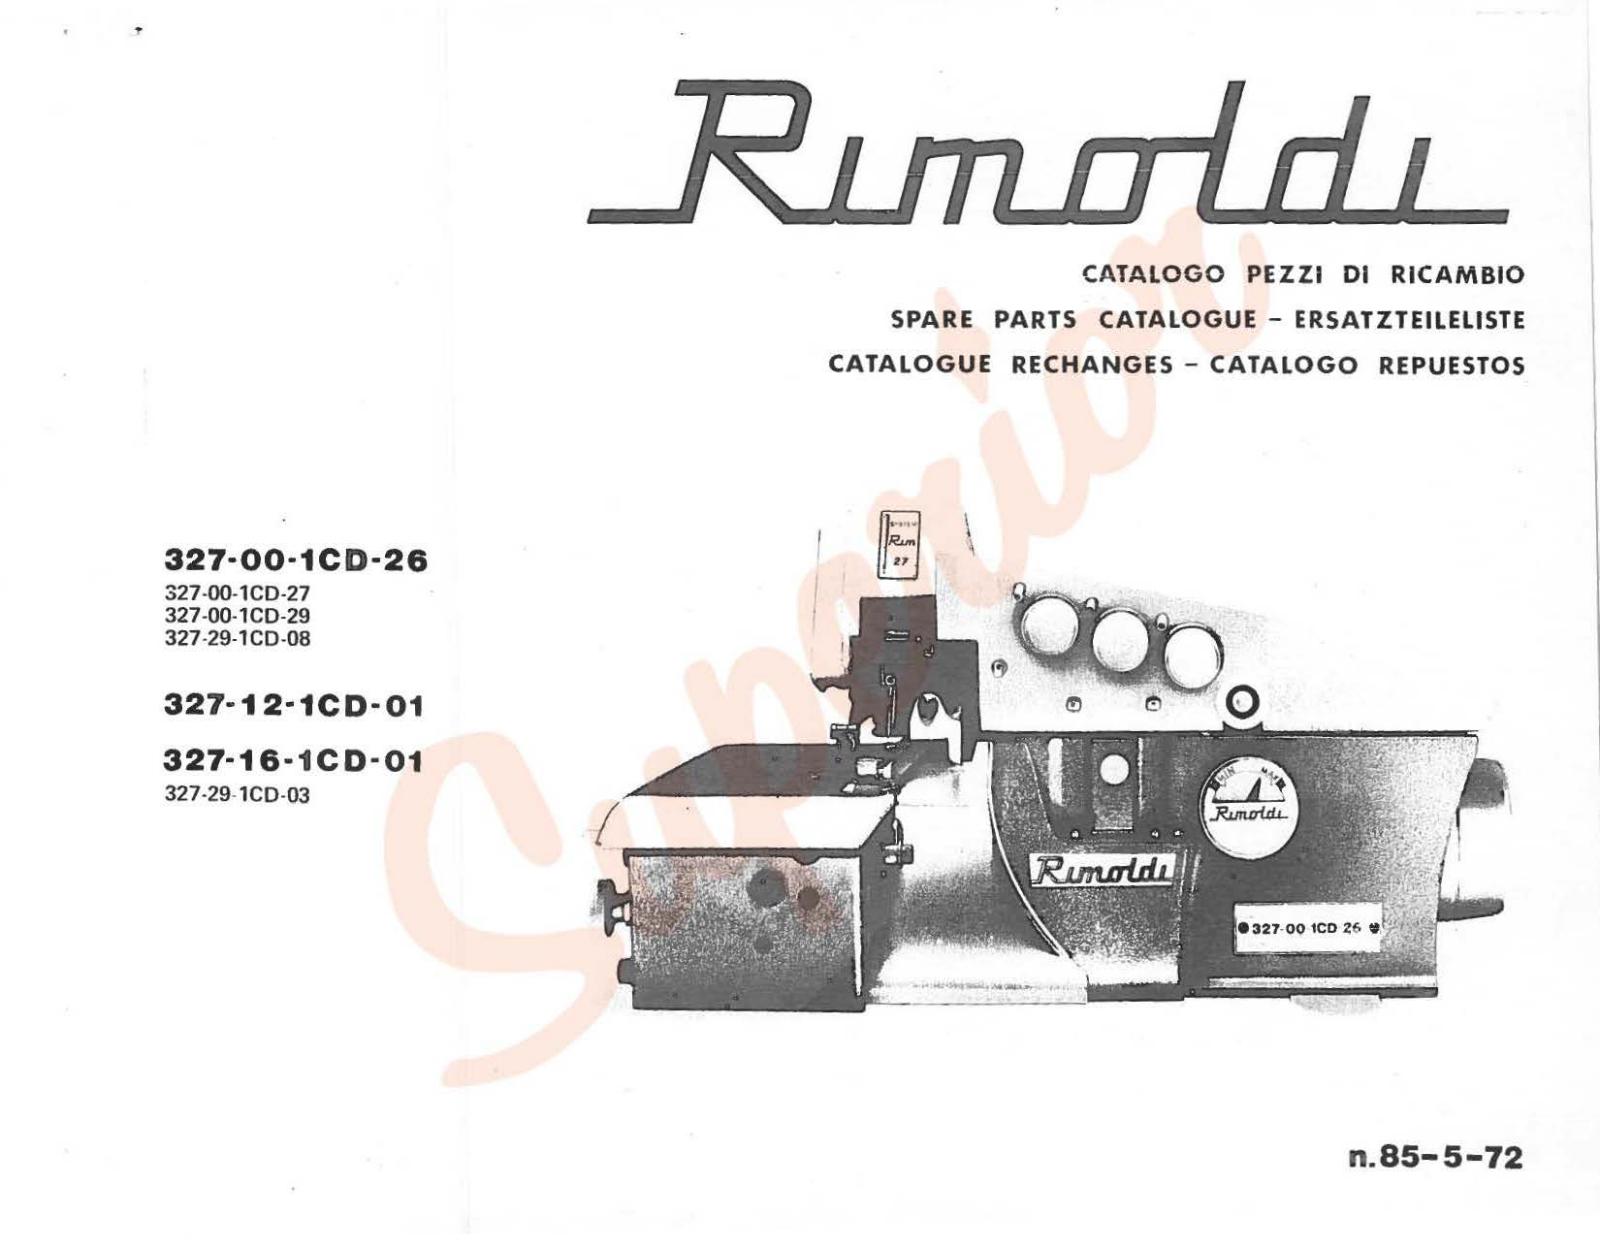 Rimoldi 327-00-1CD, 327-29-1CD-08, 327-12-1CD, 327-16-1CD Manual